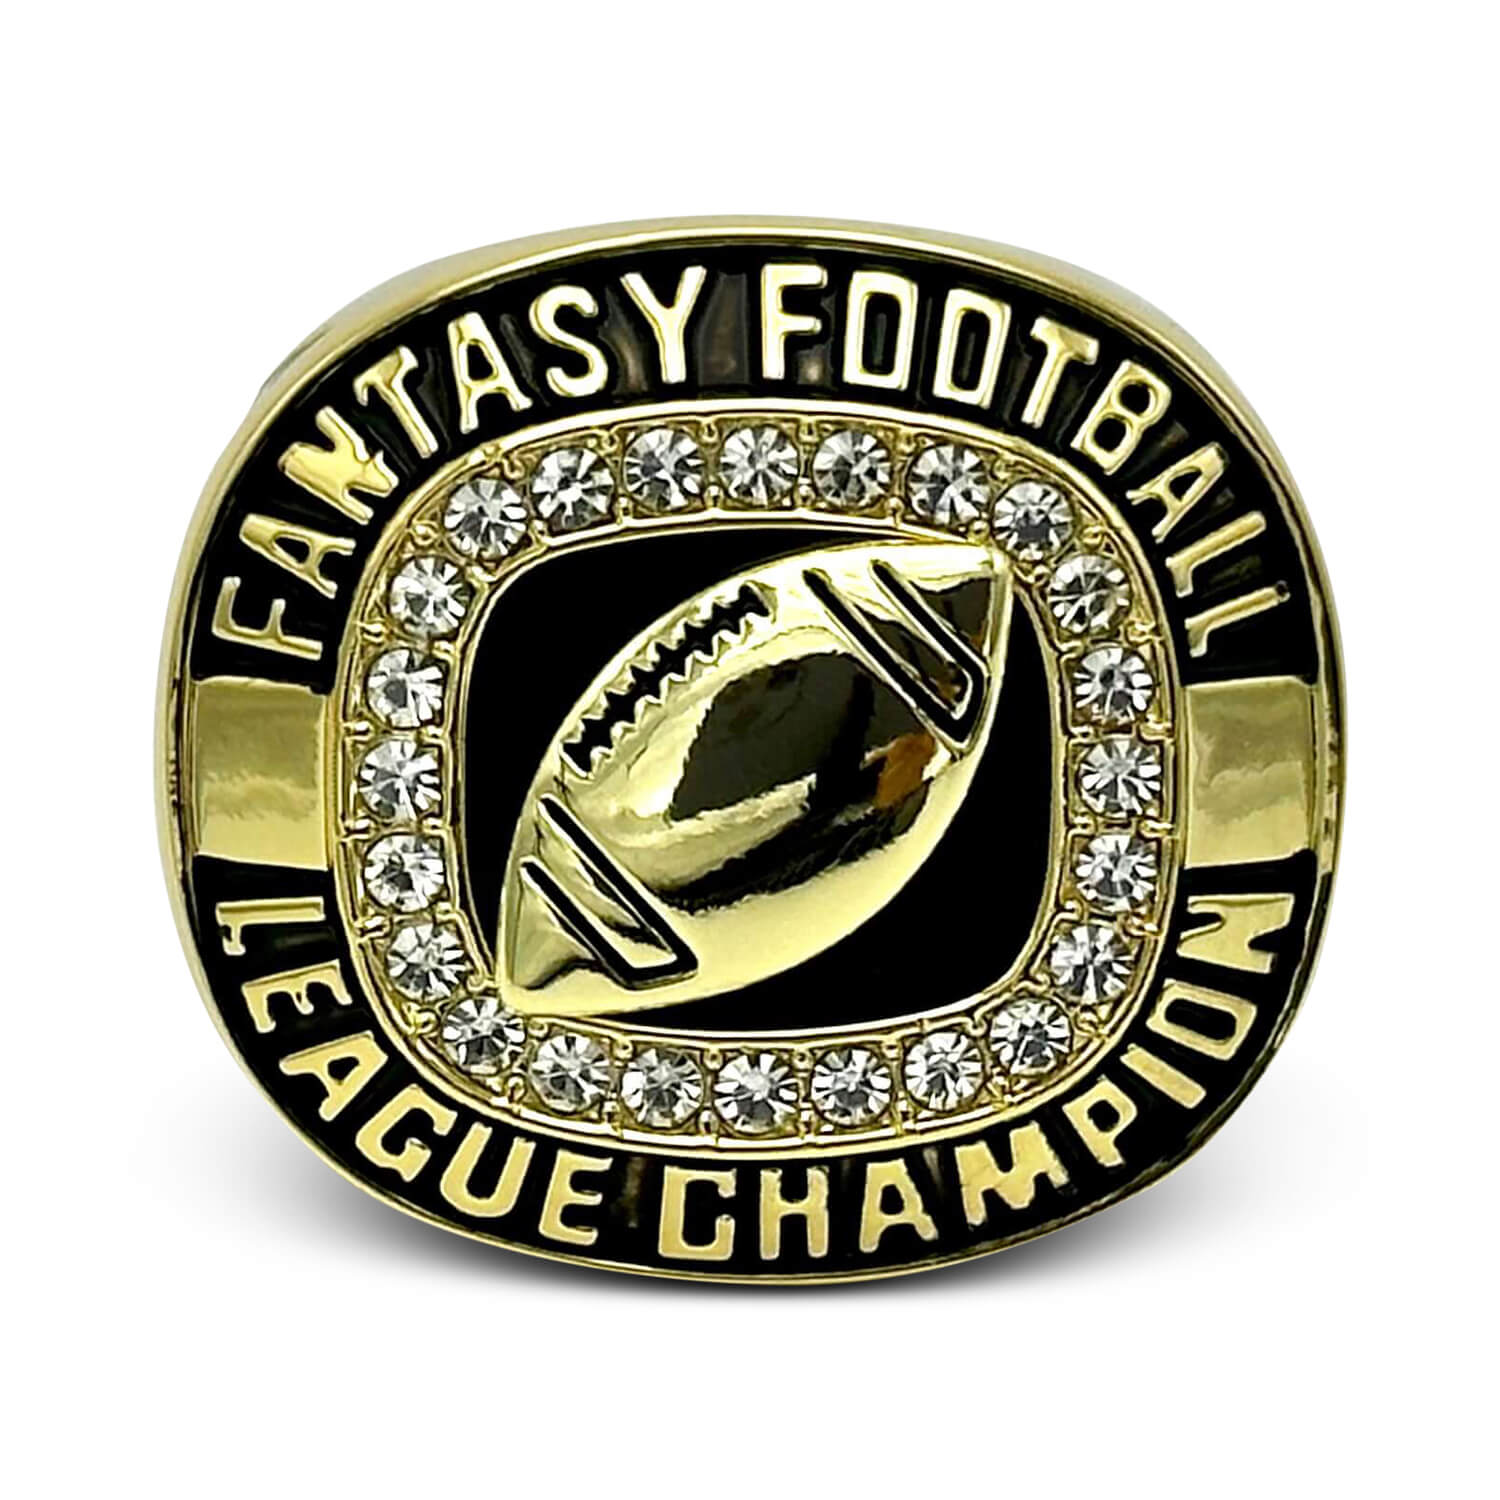 "The Prospect" Fantasy Football Championship Ring